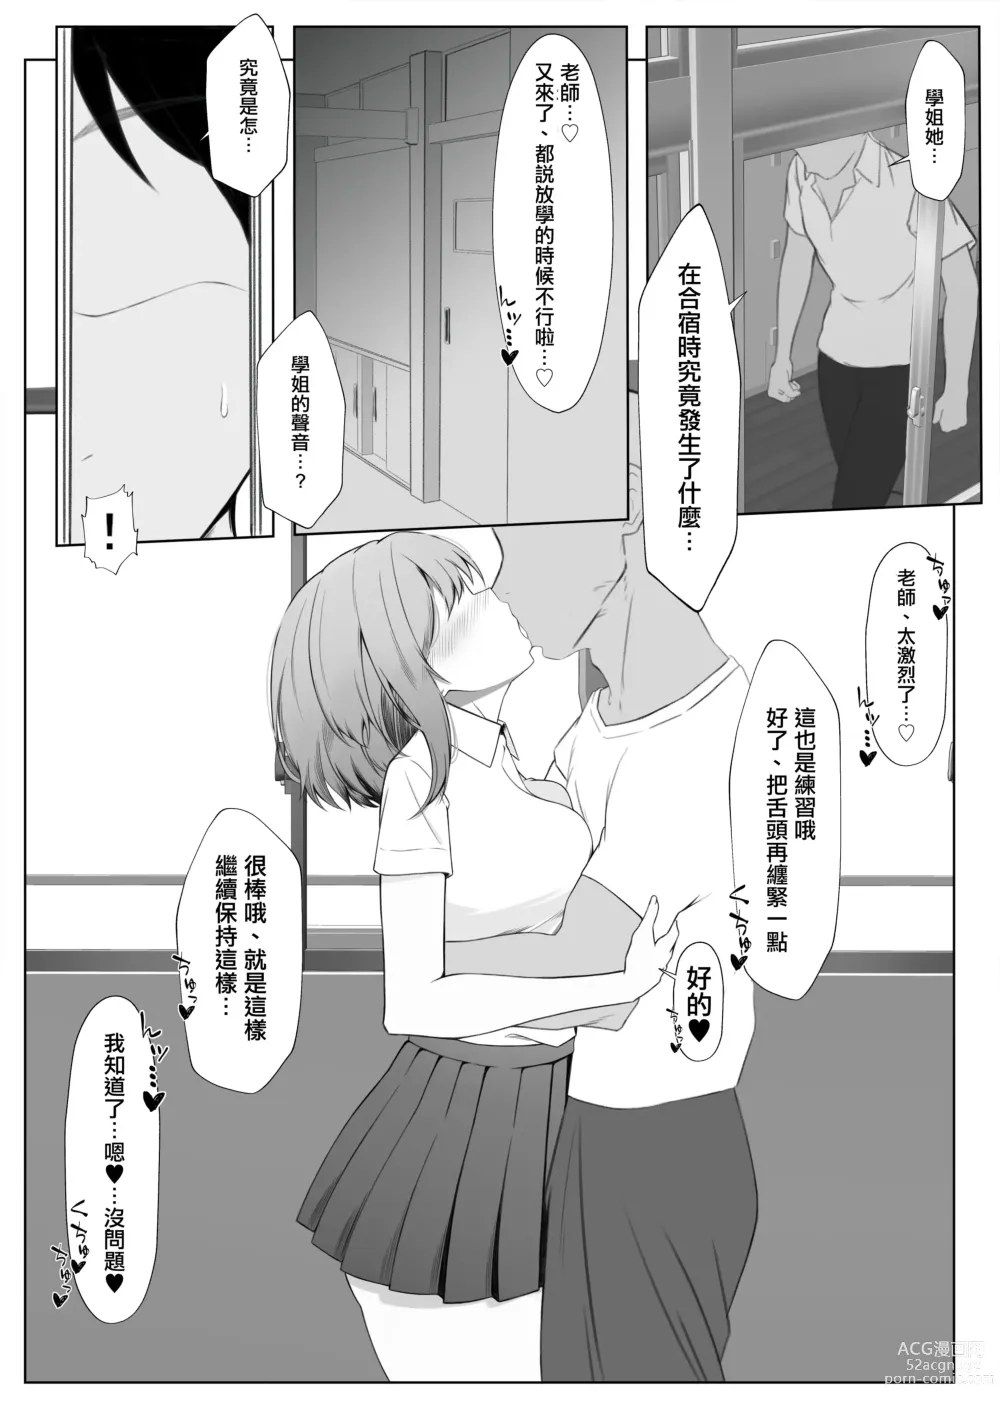 Page 5 of doujinshi 如果女朋友被別人睡走了那我就再把她给睡回來就好